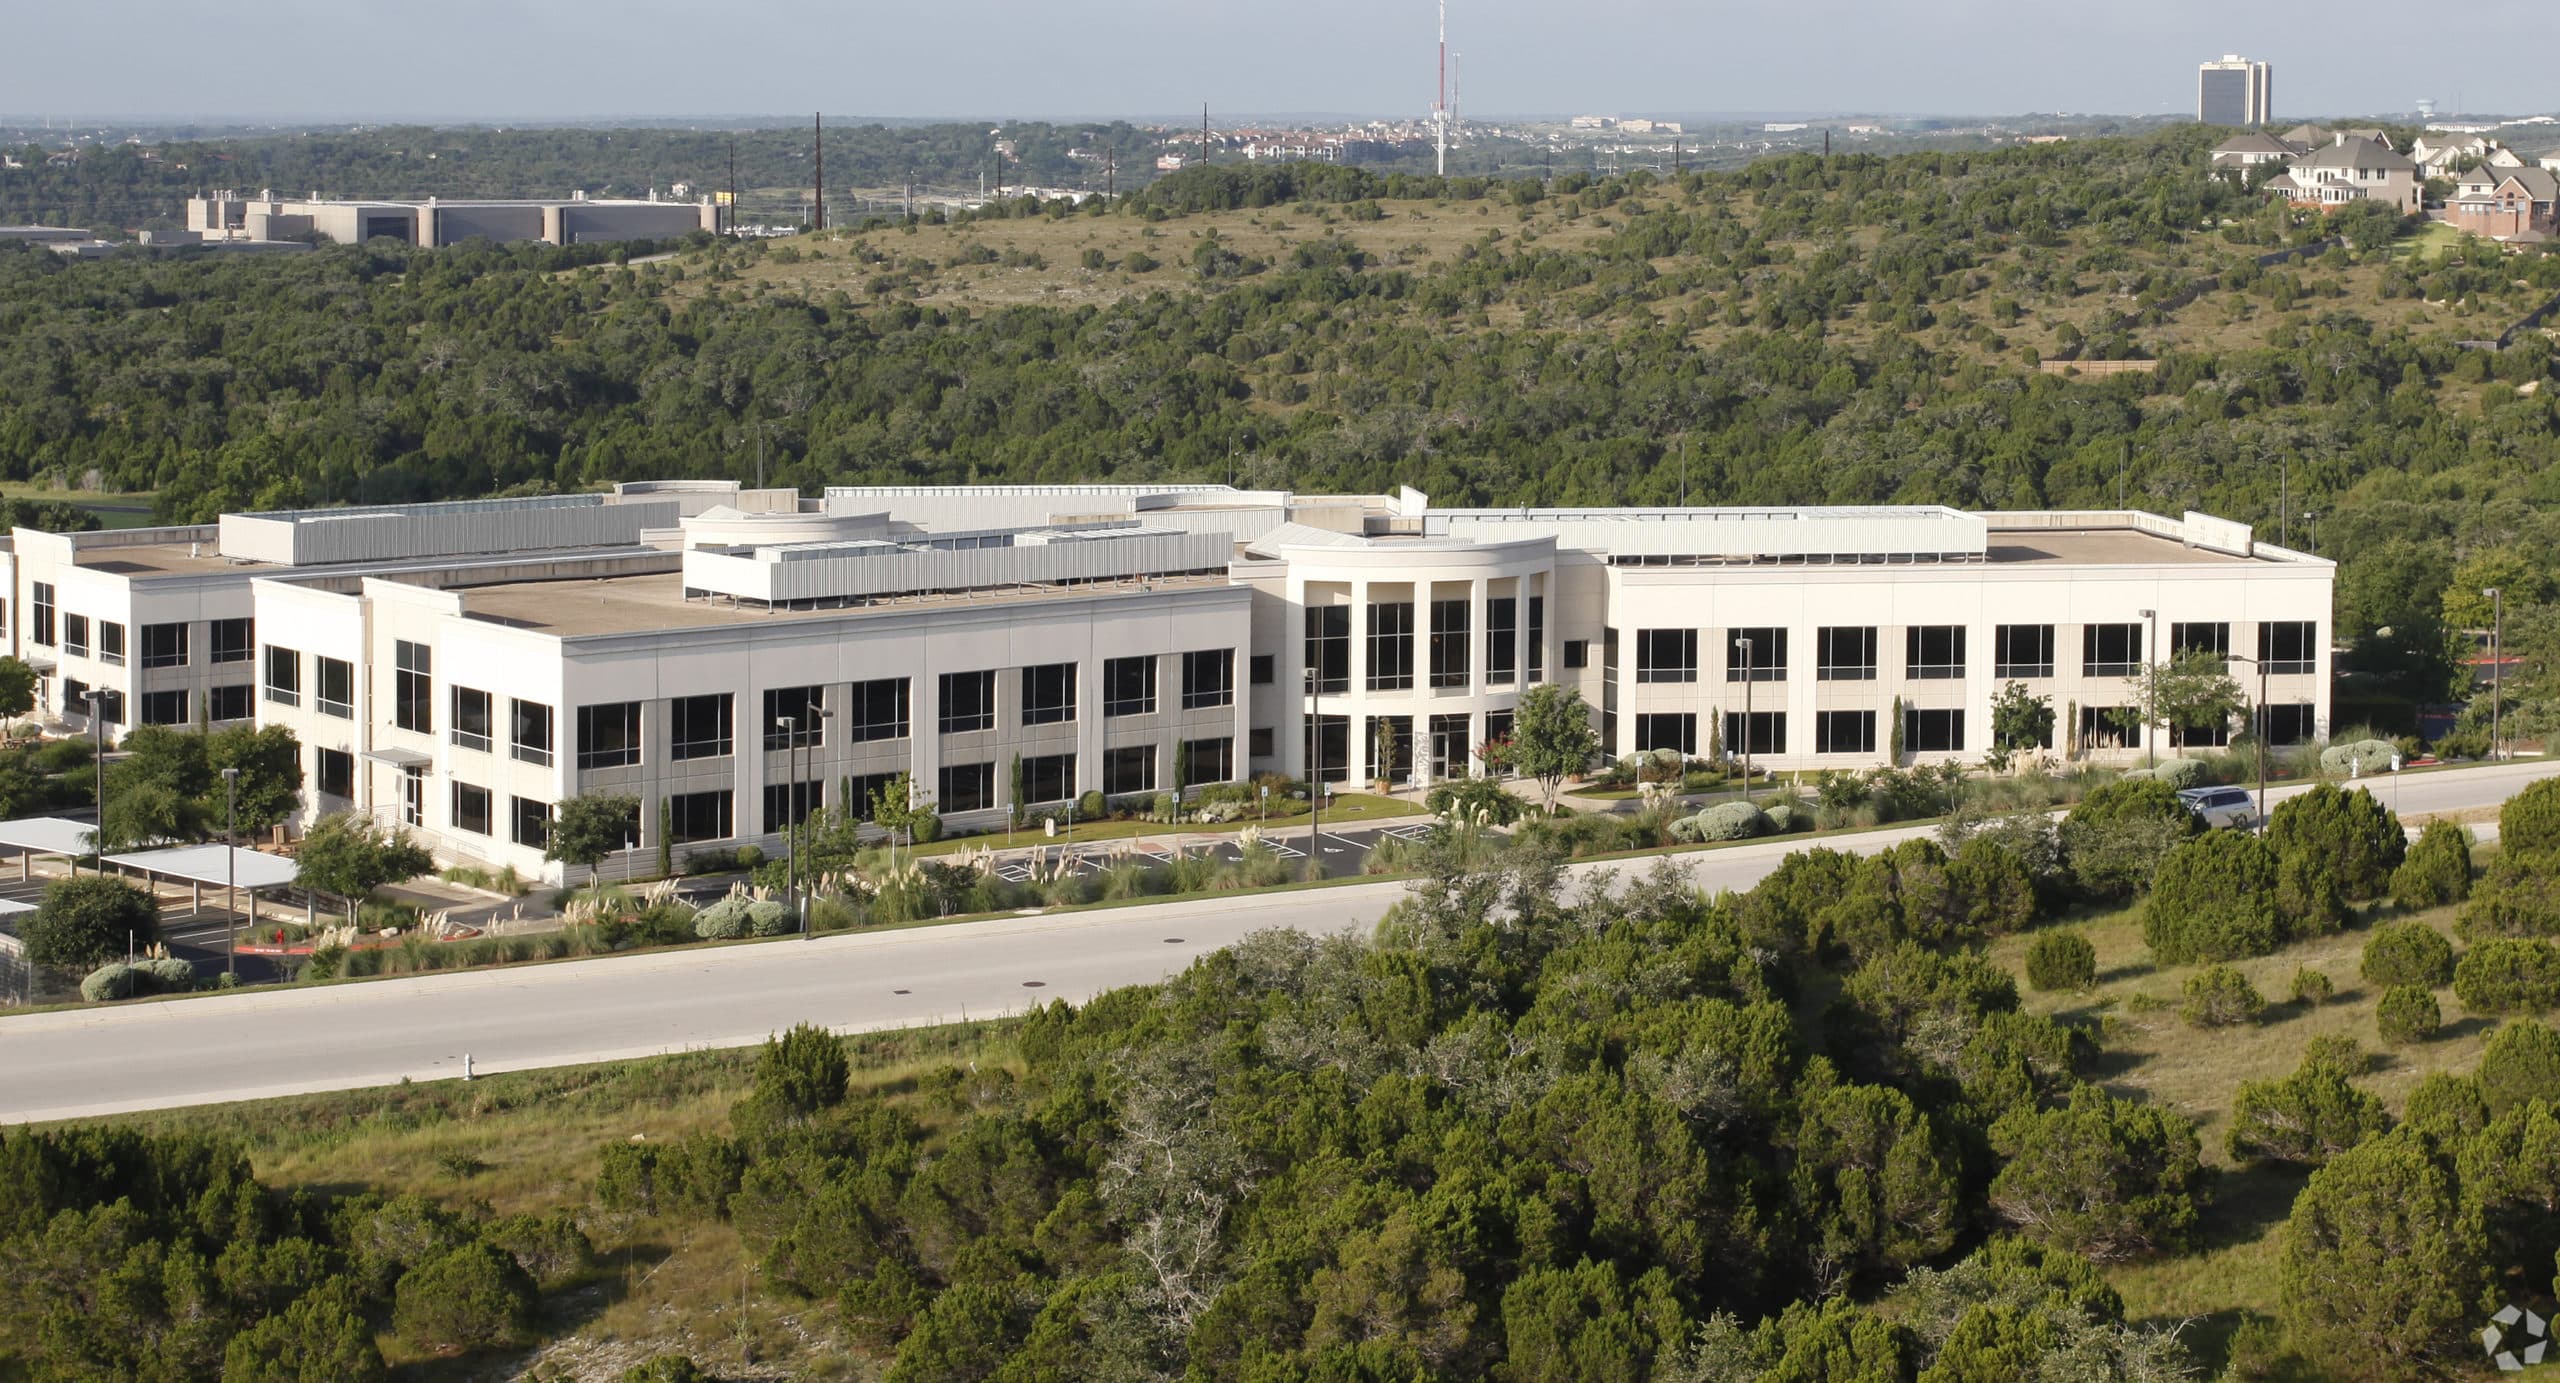 7000 West at Lantana | Office Building Sales 2020 Austin